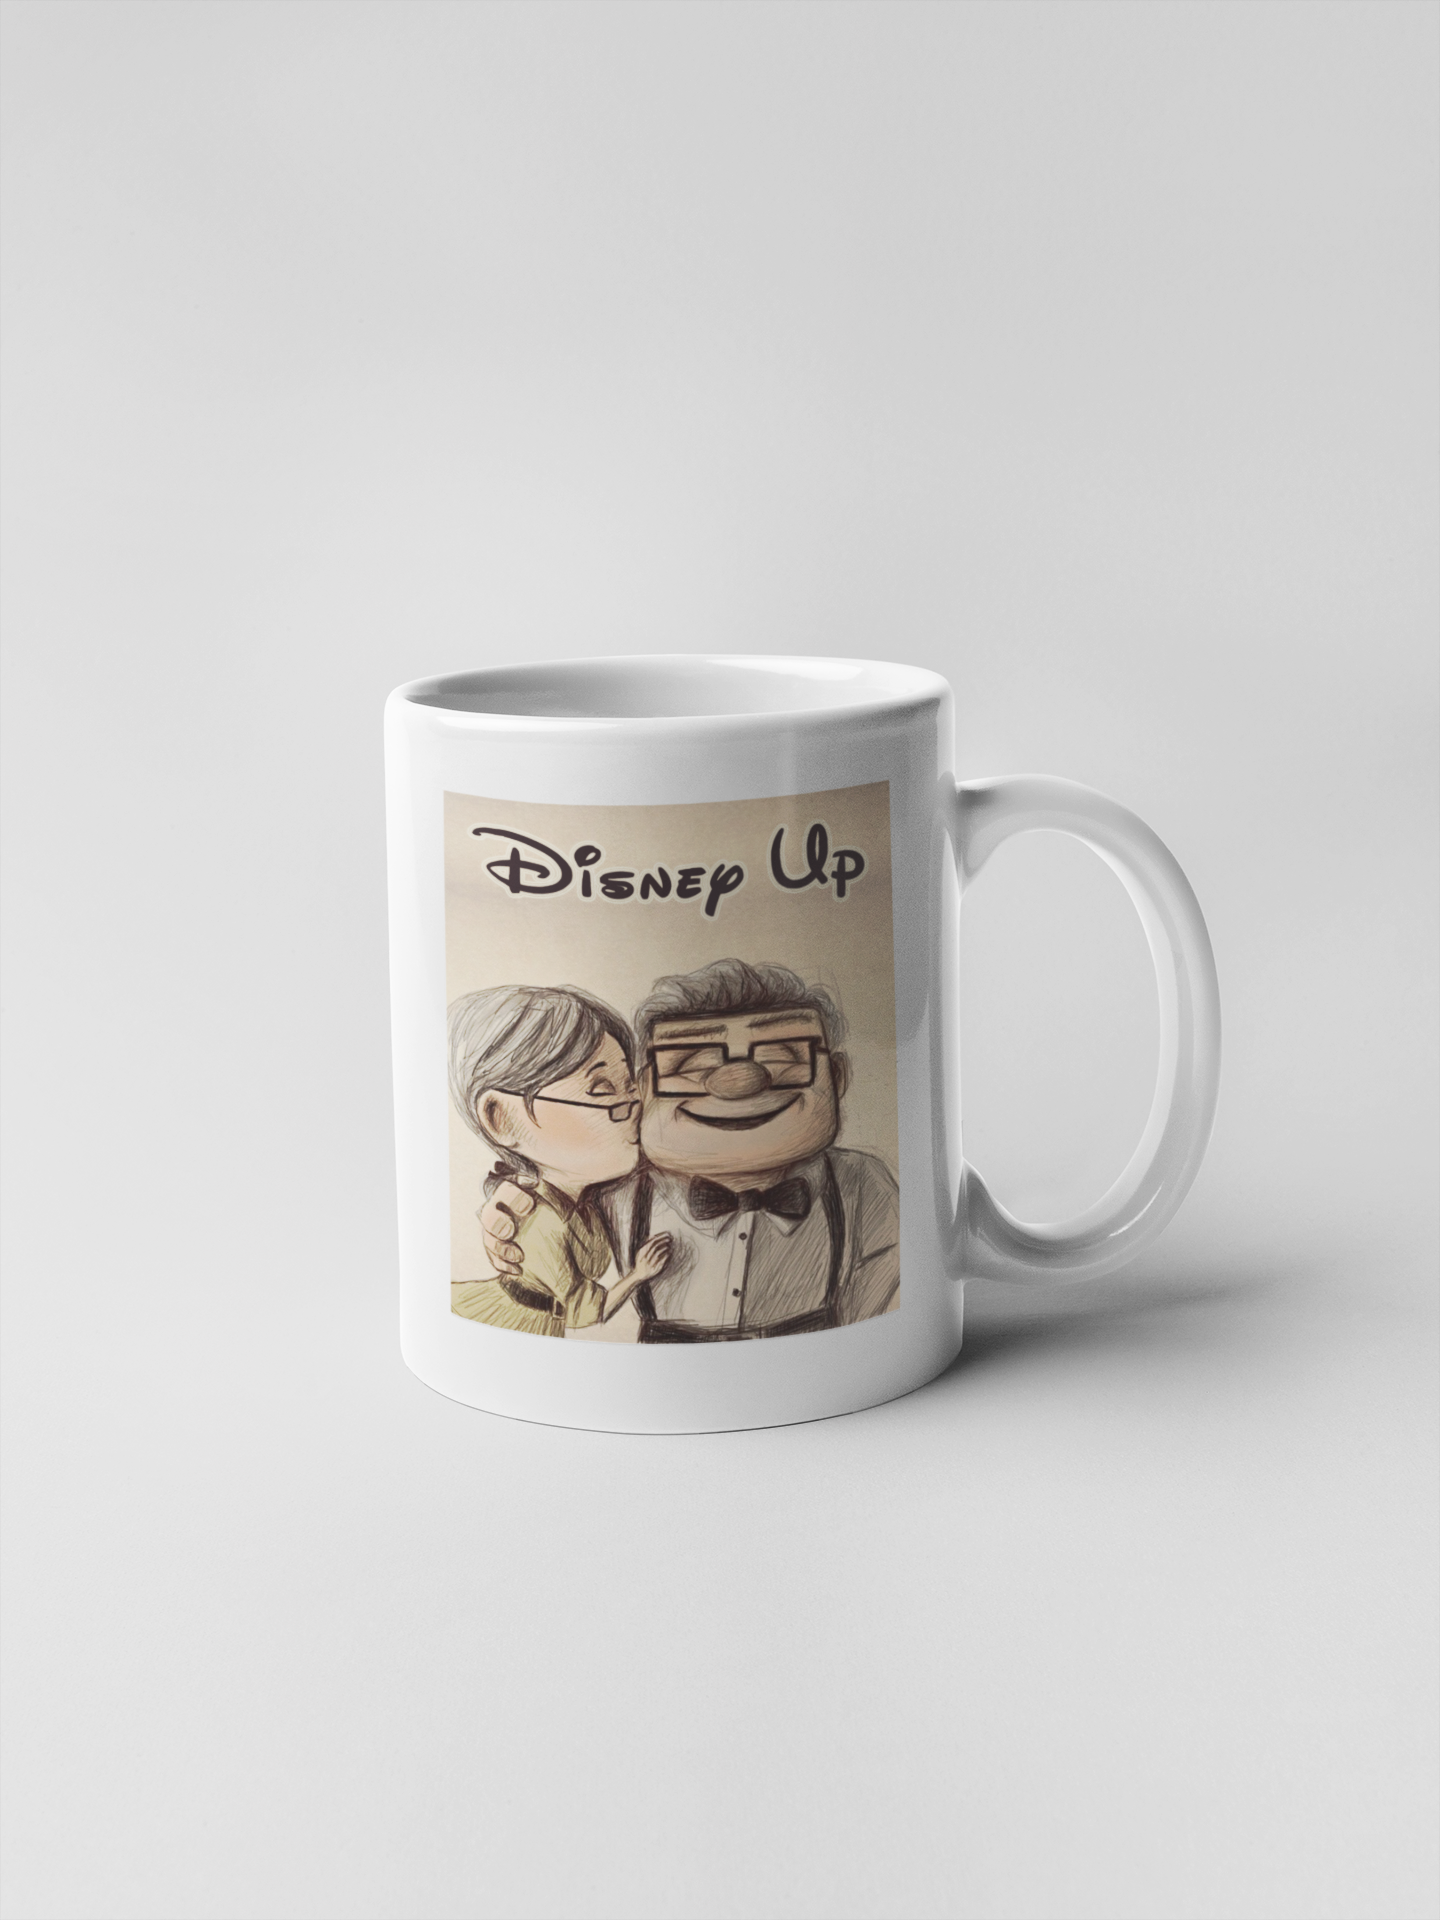 Disney Up Ellie and Carl Fredrickson Sketch Ceramic Coffee Mugs